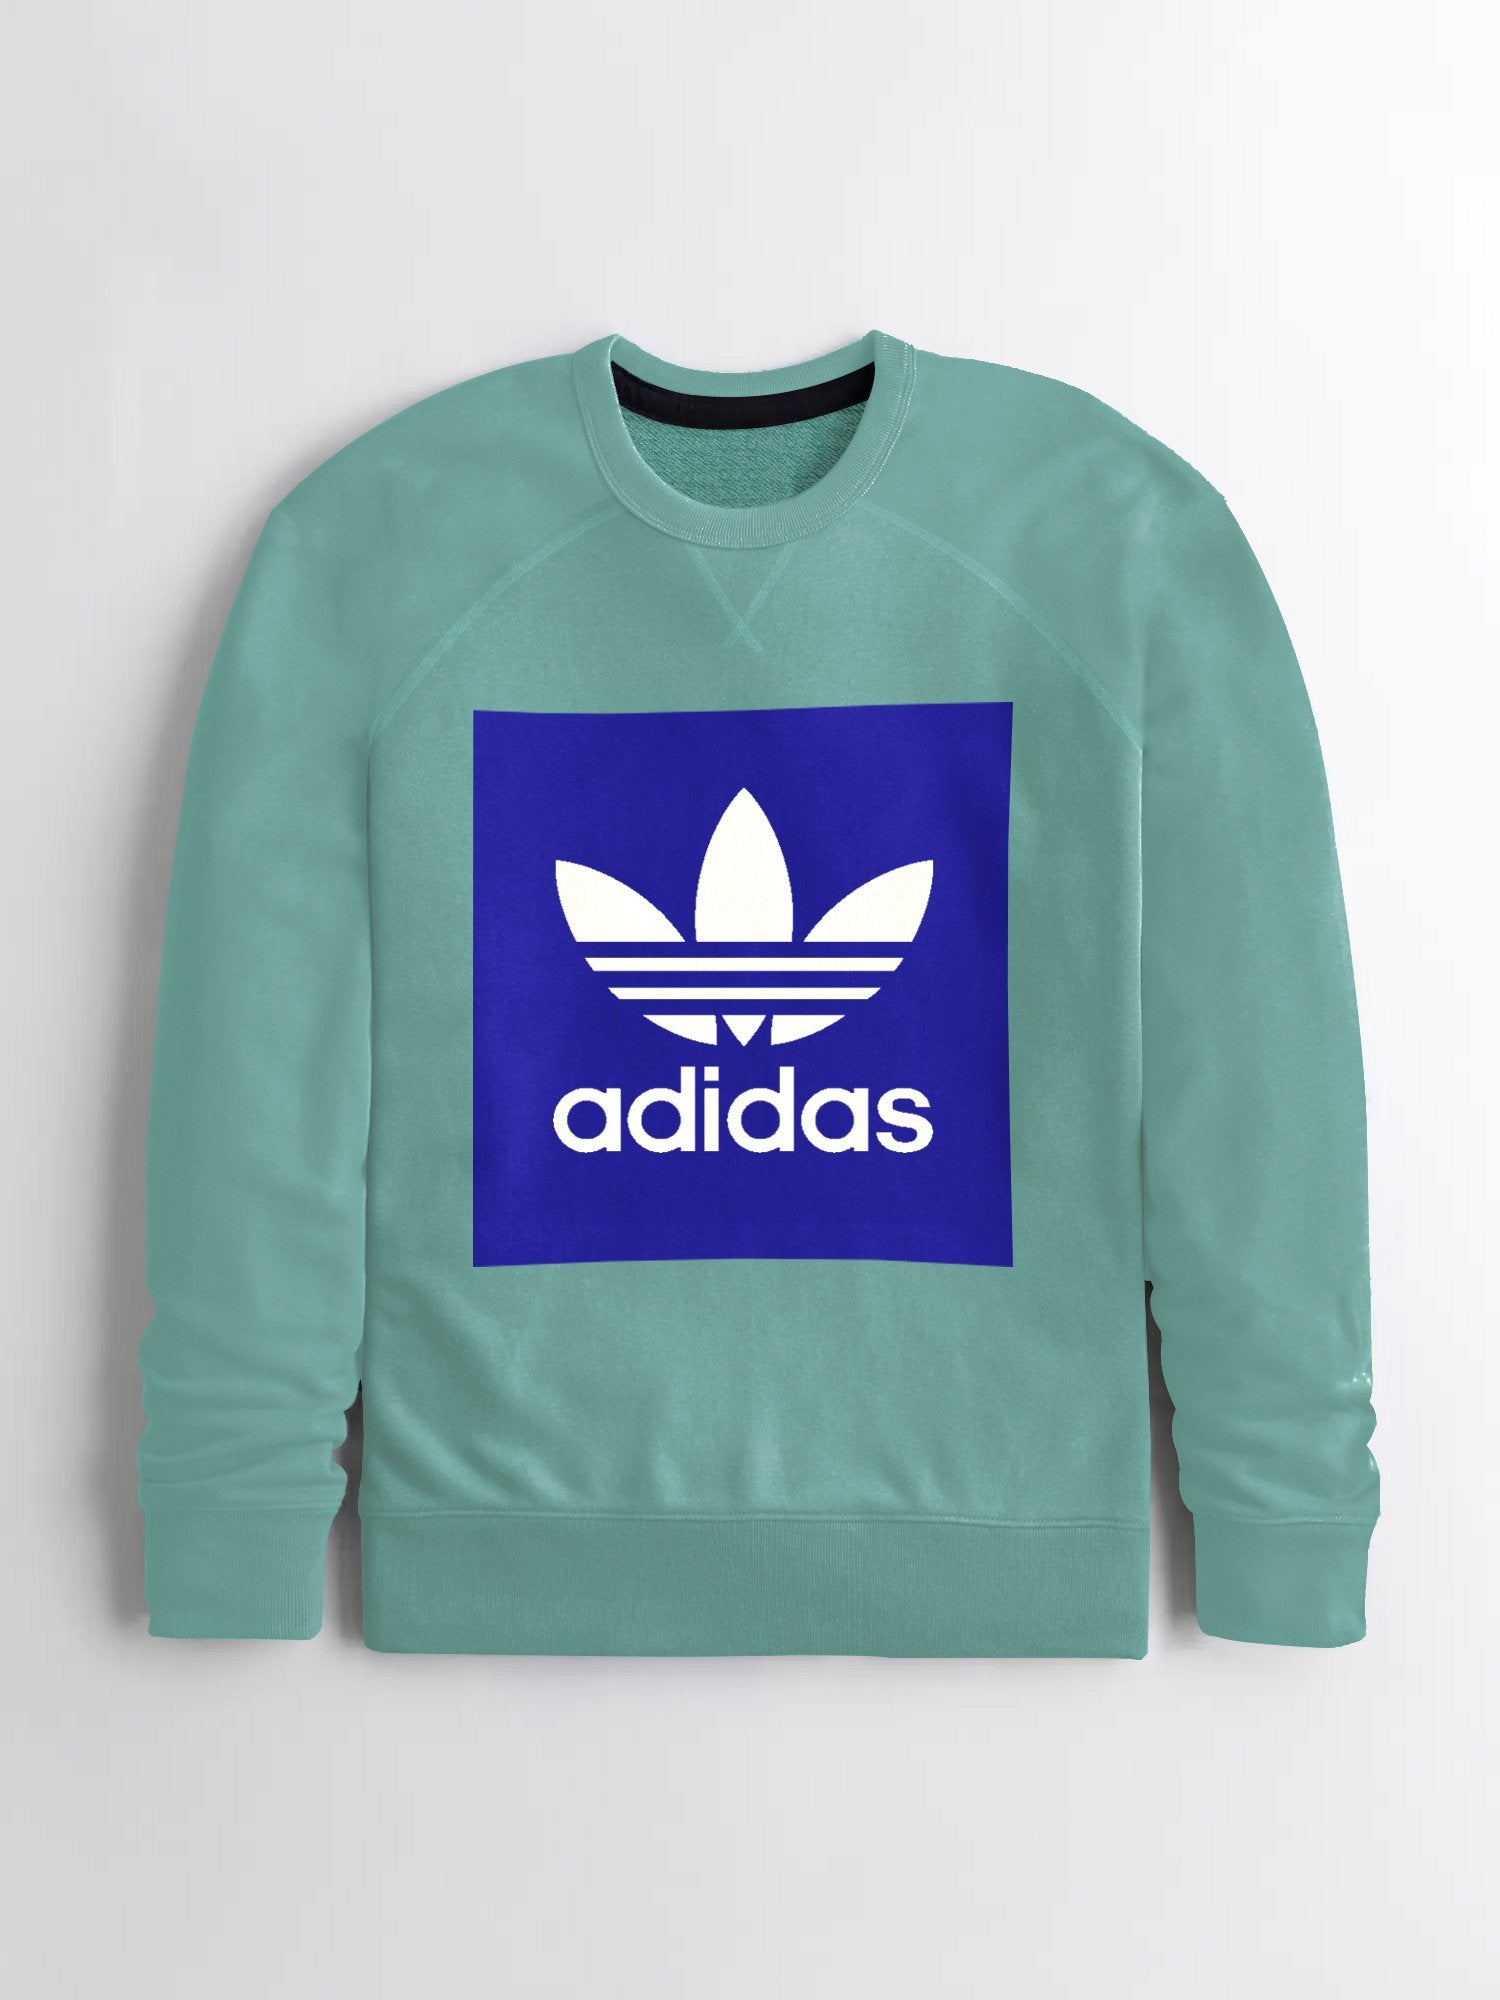 Adidas Crew Neck Terry Fleece Sweatshirt For Men-Cyan Green & Blue-RT925